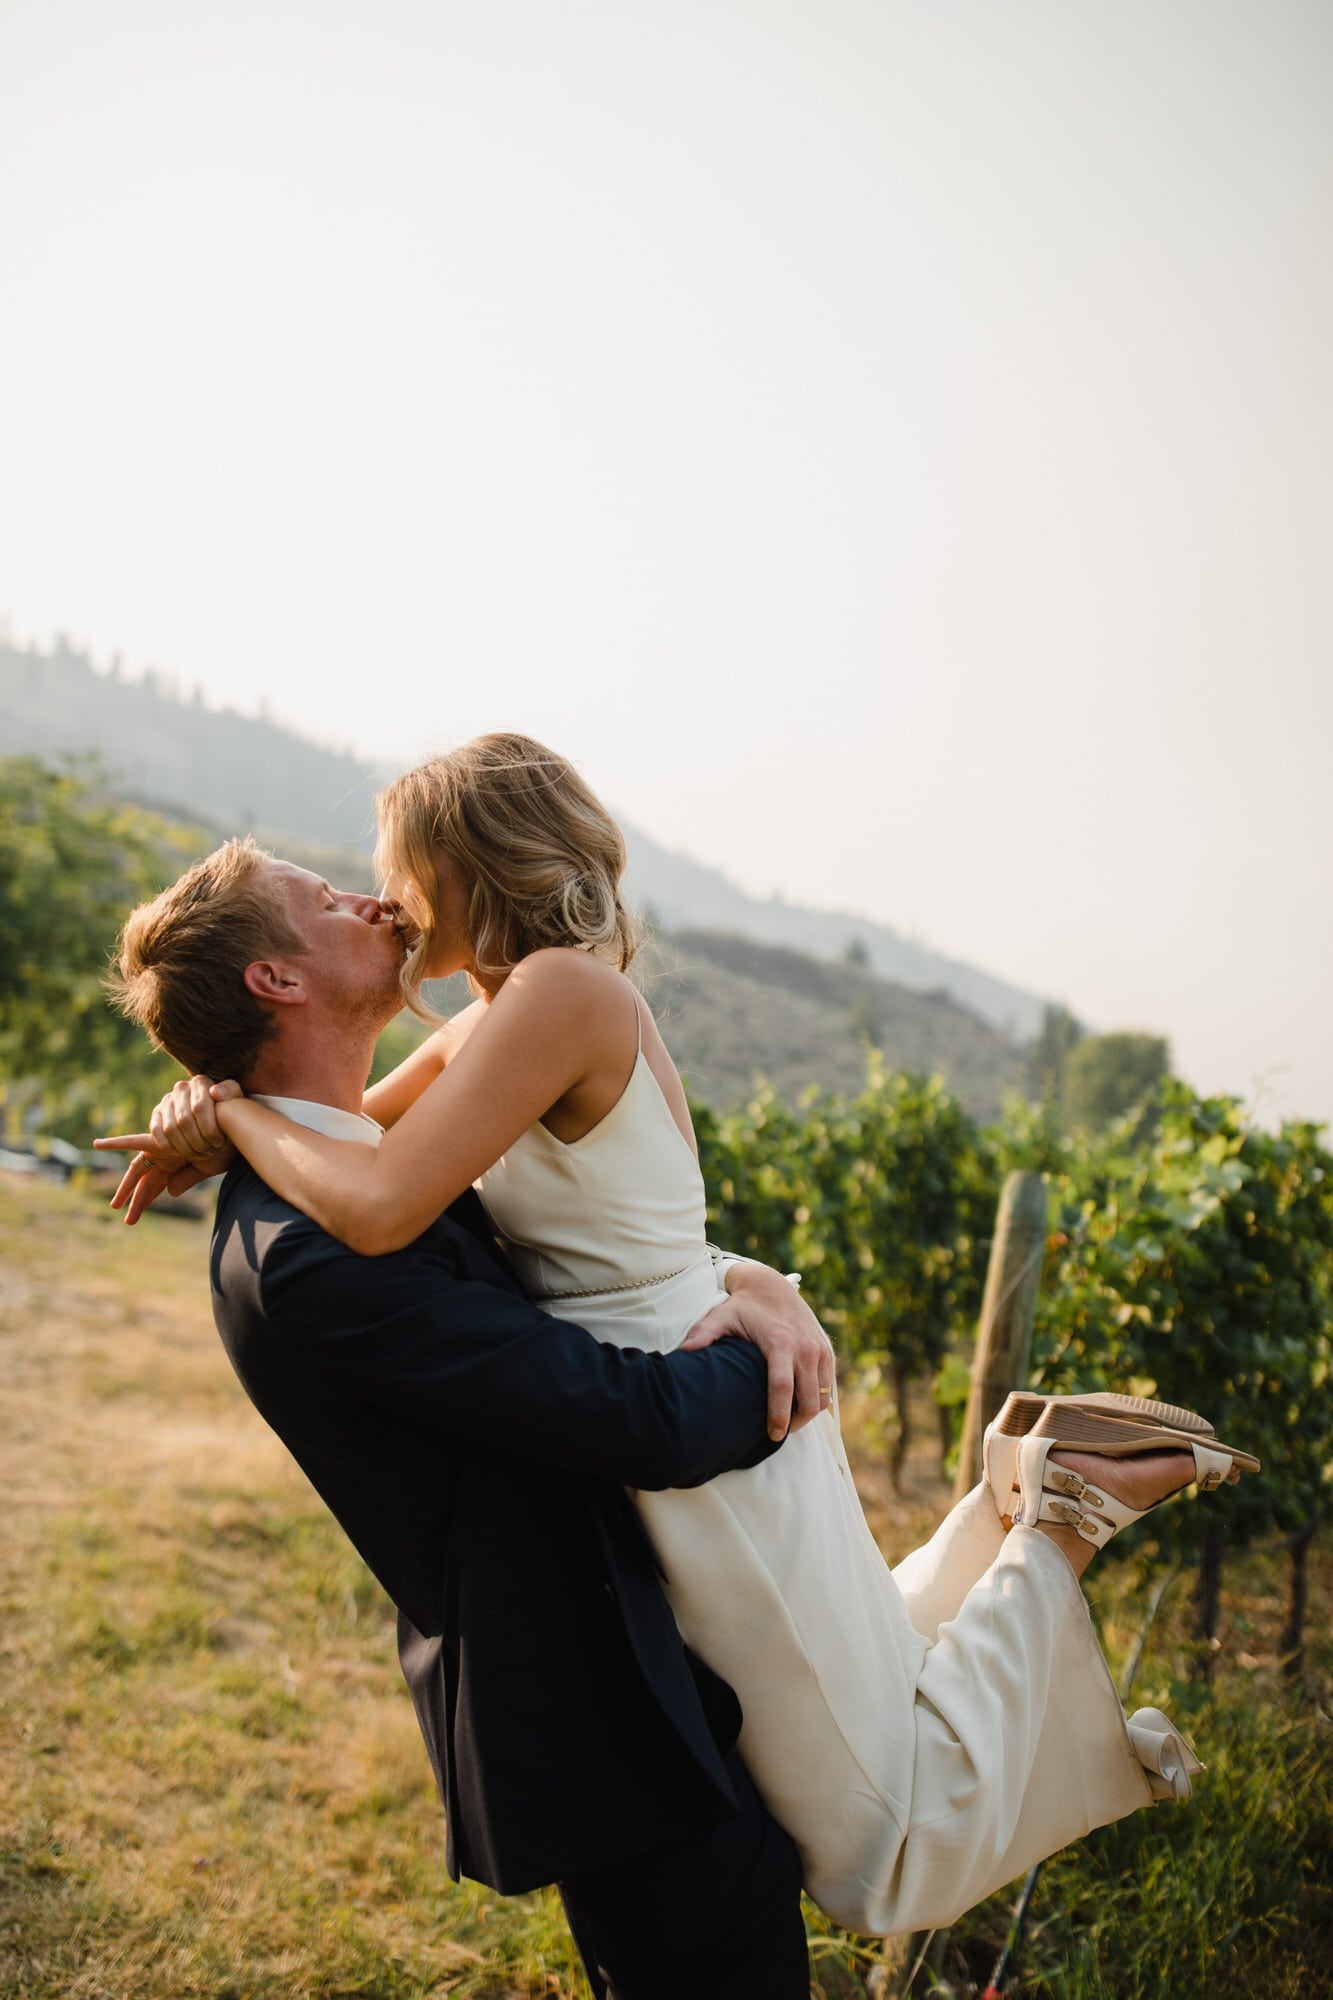 Groom lifts the bride for a kiss at Evolve Cellars Vineyard on Lake Okanagan, Summerland, BC. Destination wedding photographer Brent Calis.